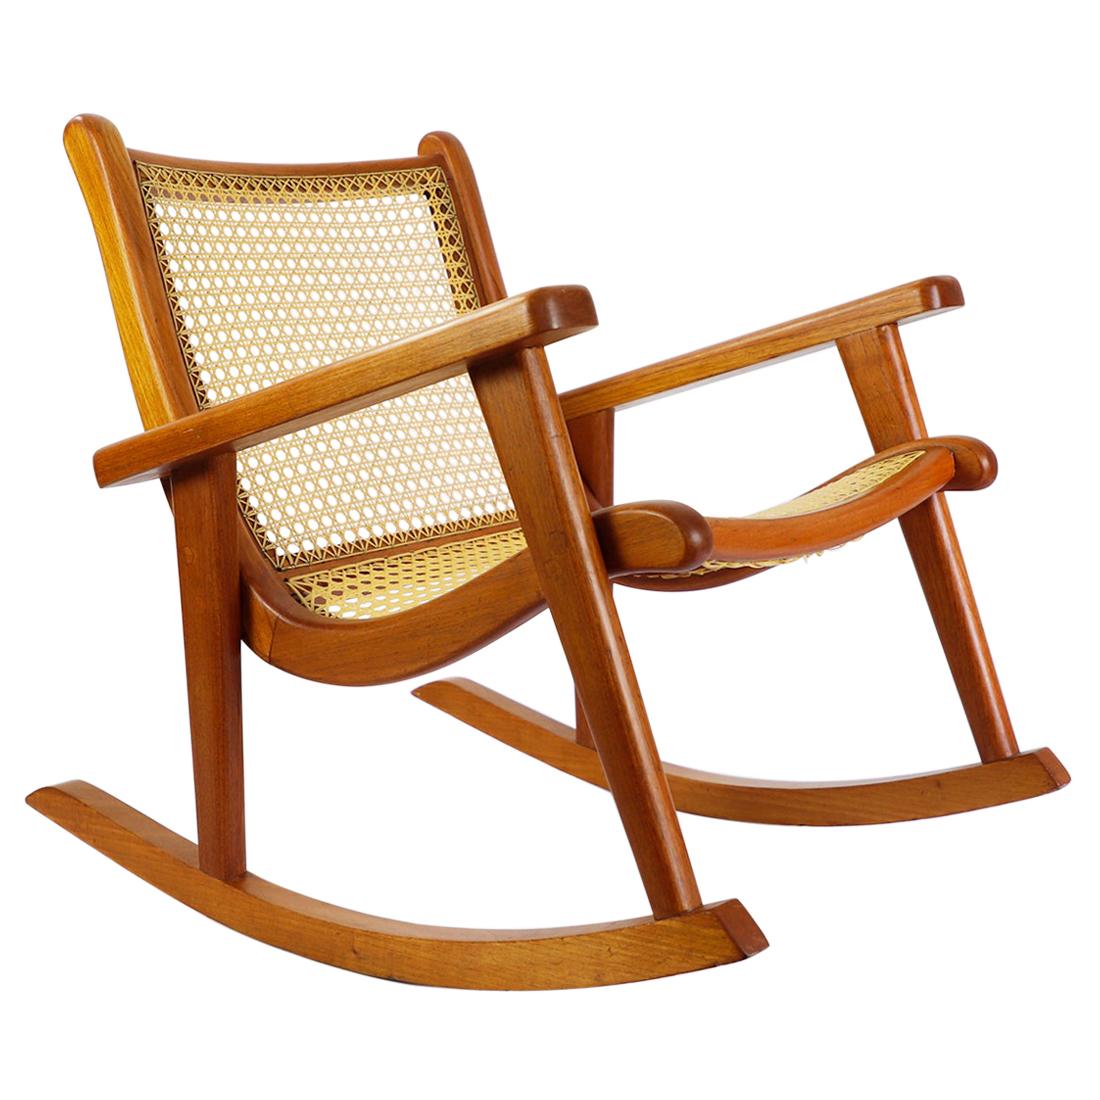 Mexican Rocking Chair Attributed to Michael van Beuren